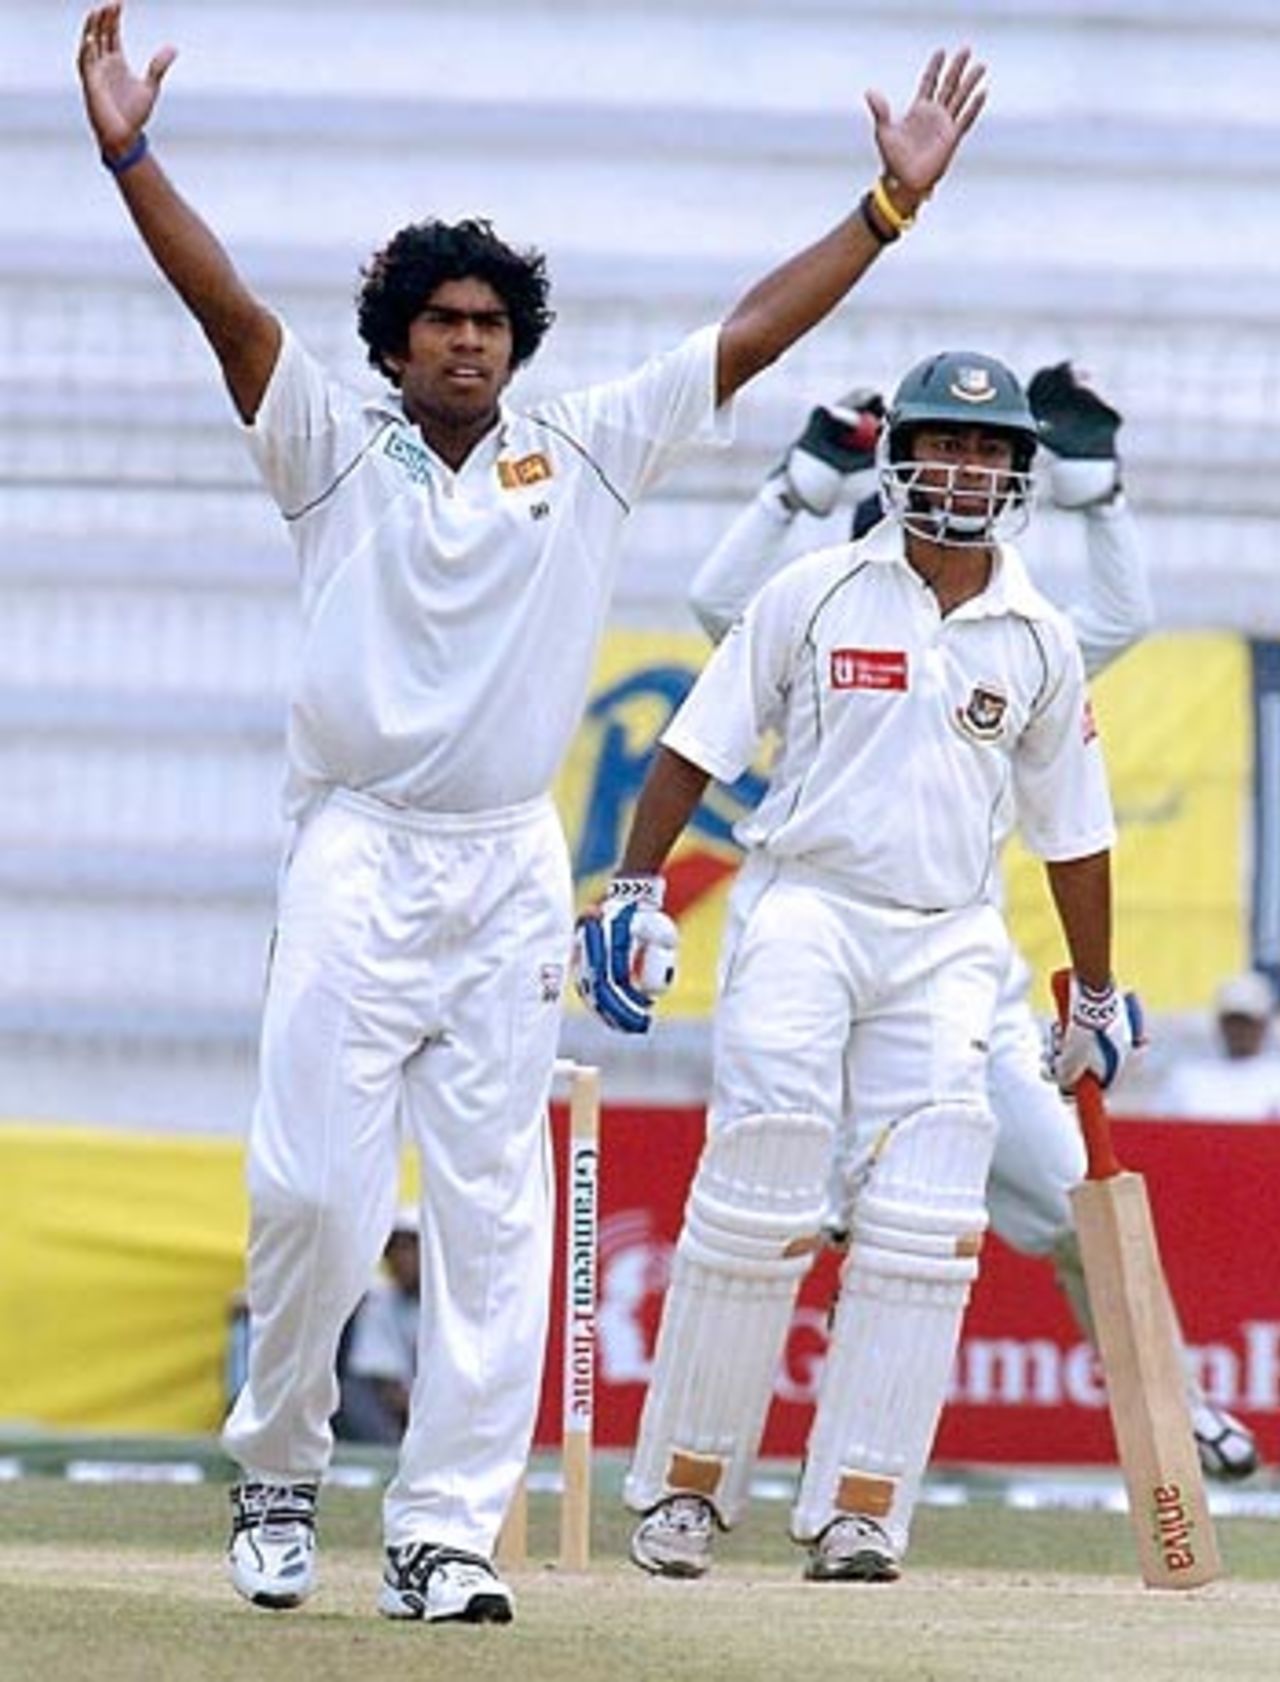 Lasith Malinga successfully appeals against Nafees Iqbal, Bangladesh v Sri Lanka, 2nd Test, Bogra, 3rd day, March 10, 2006